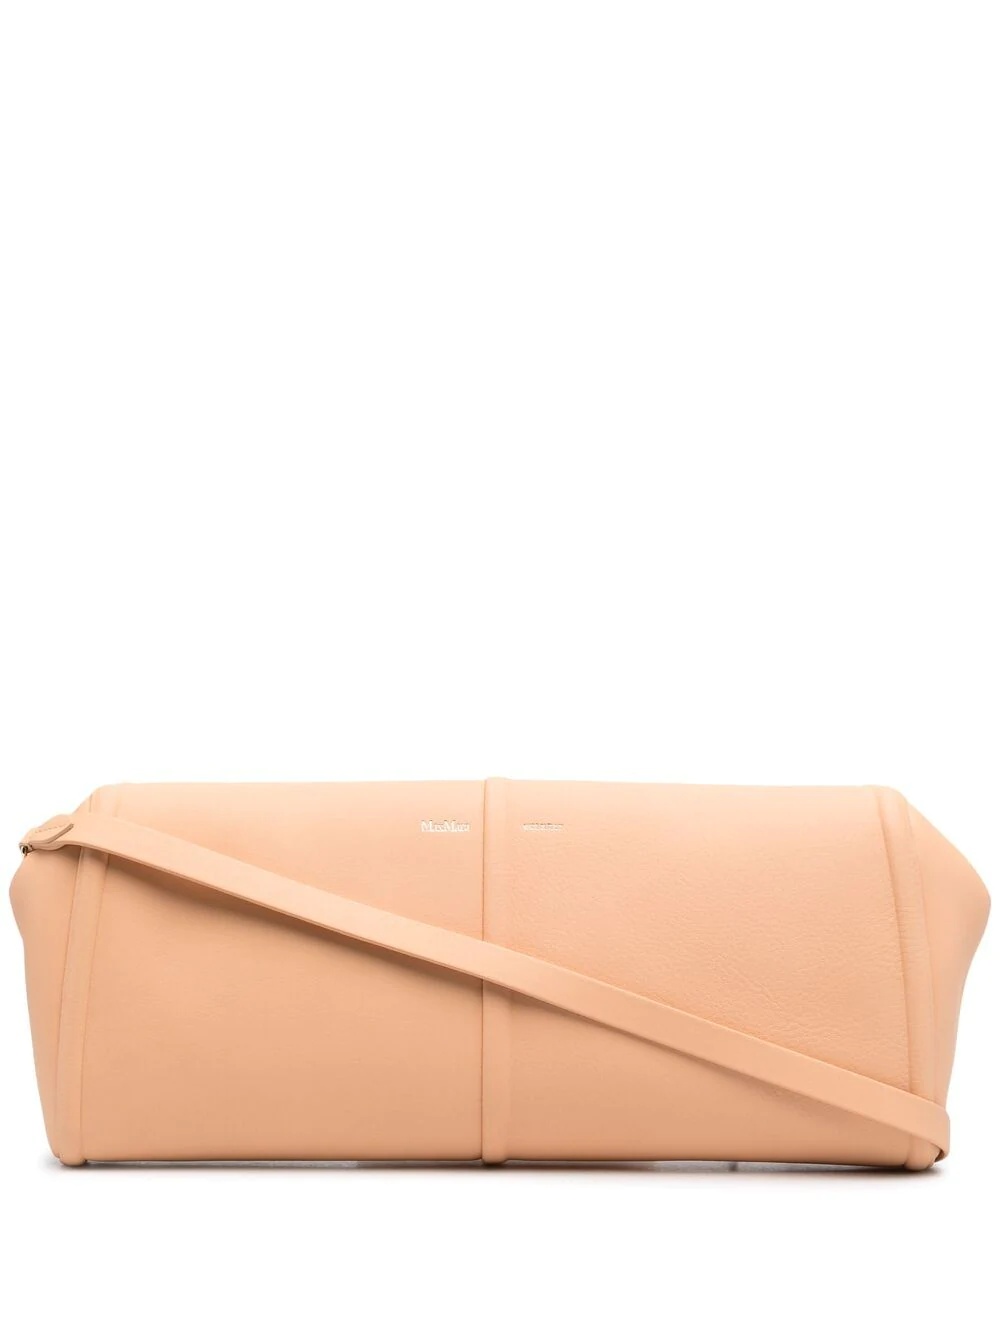 leather clutch bag - 1